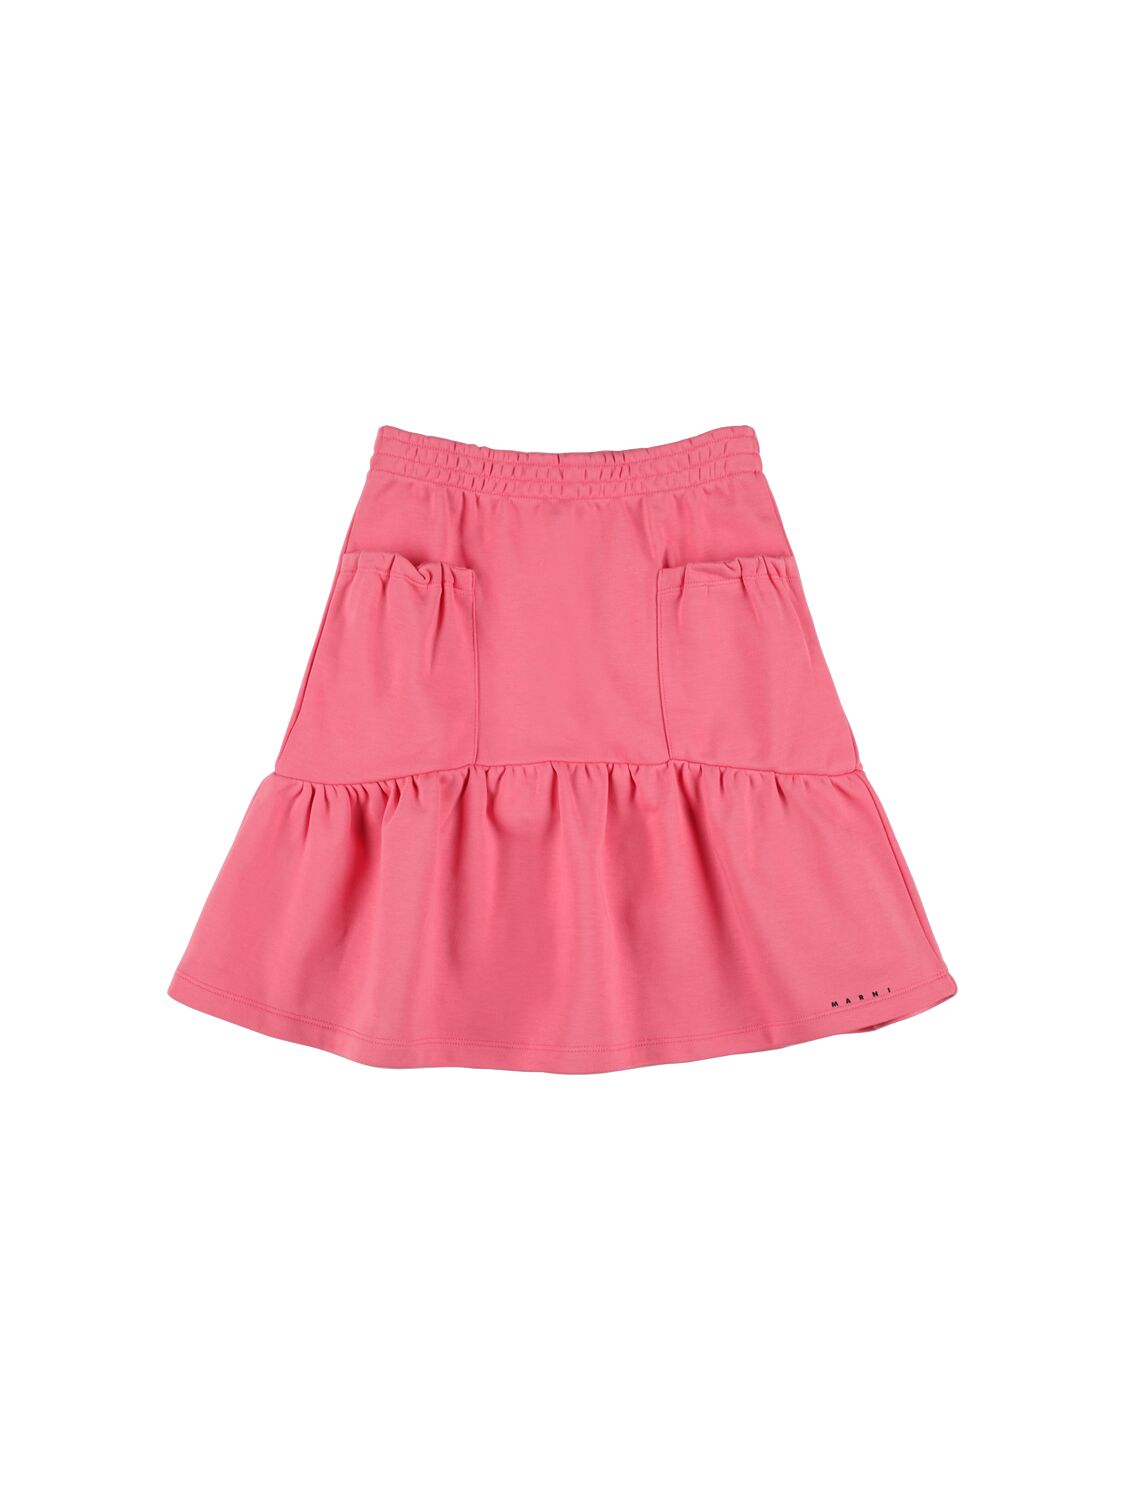 Image of Cotton Skirt